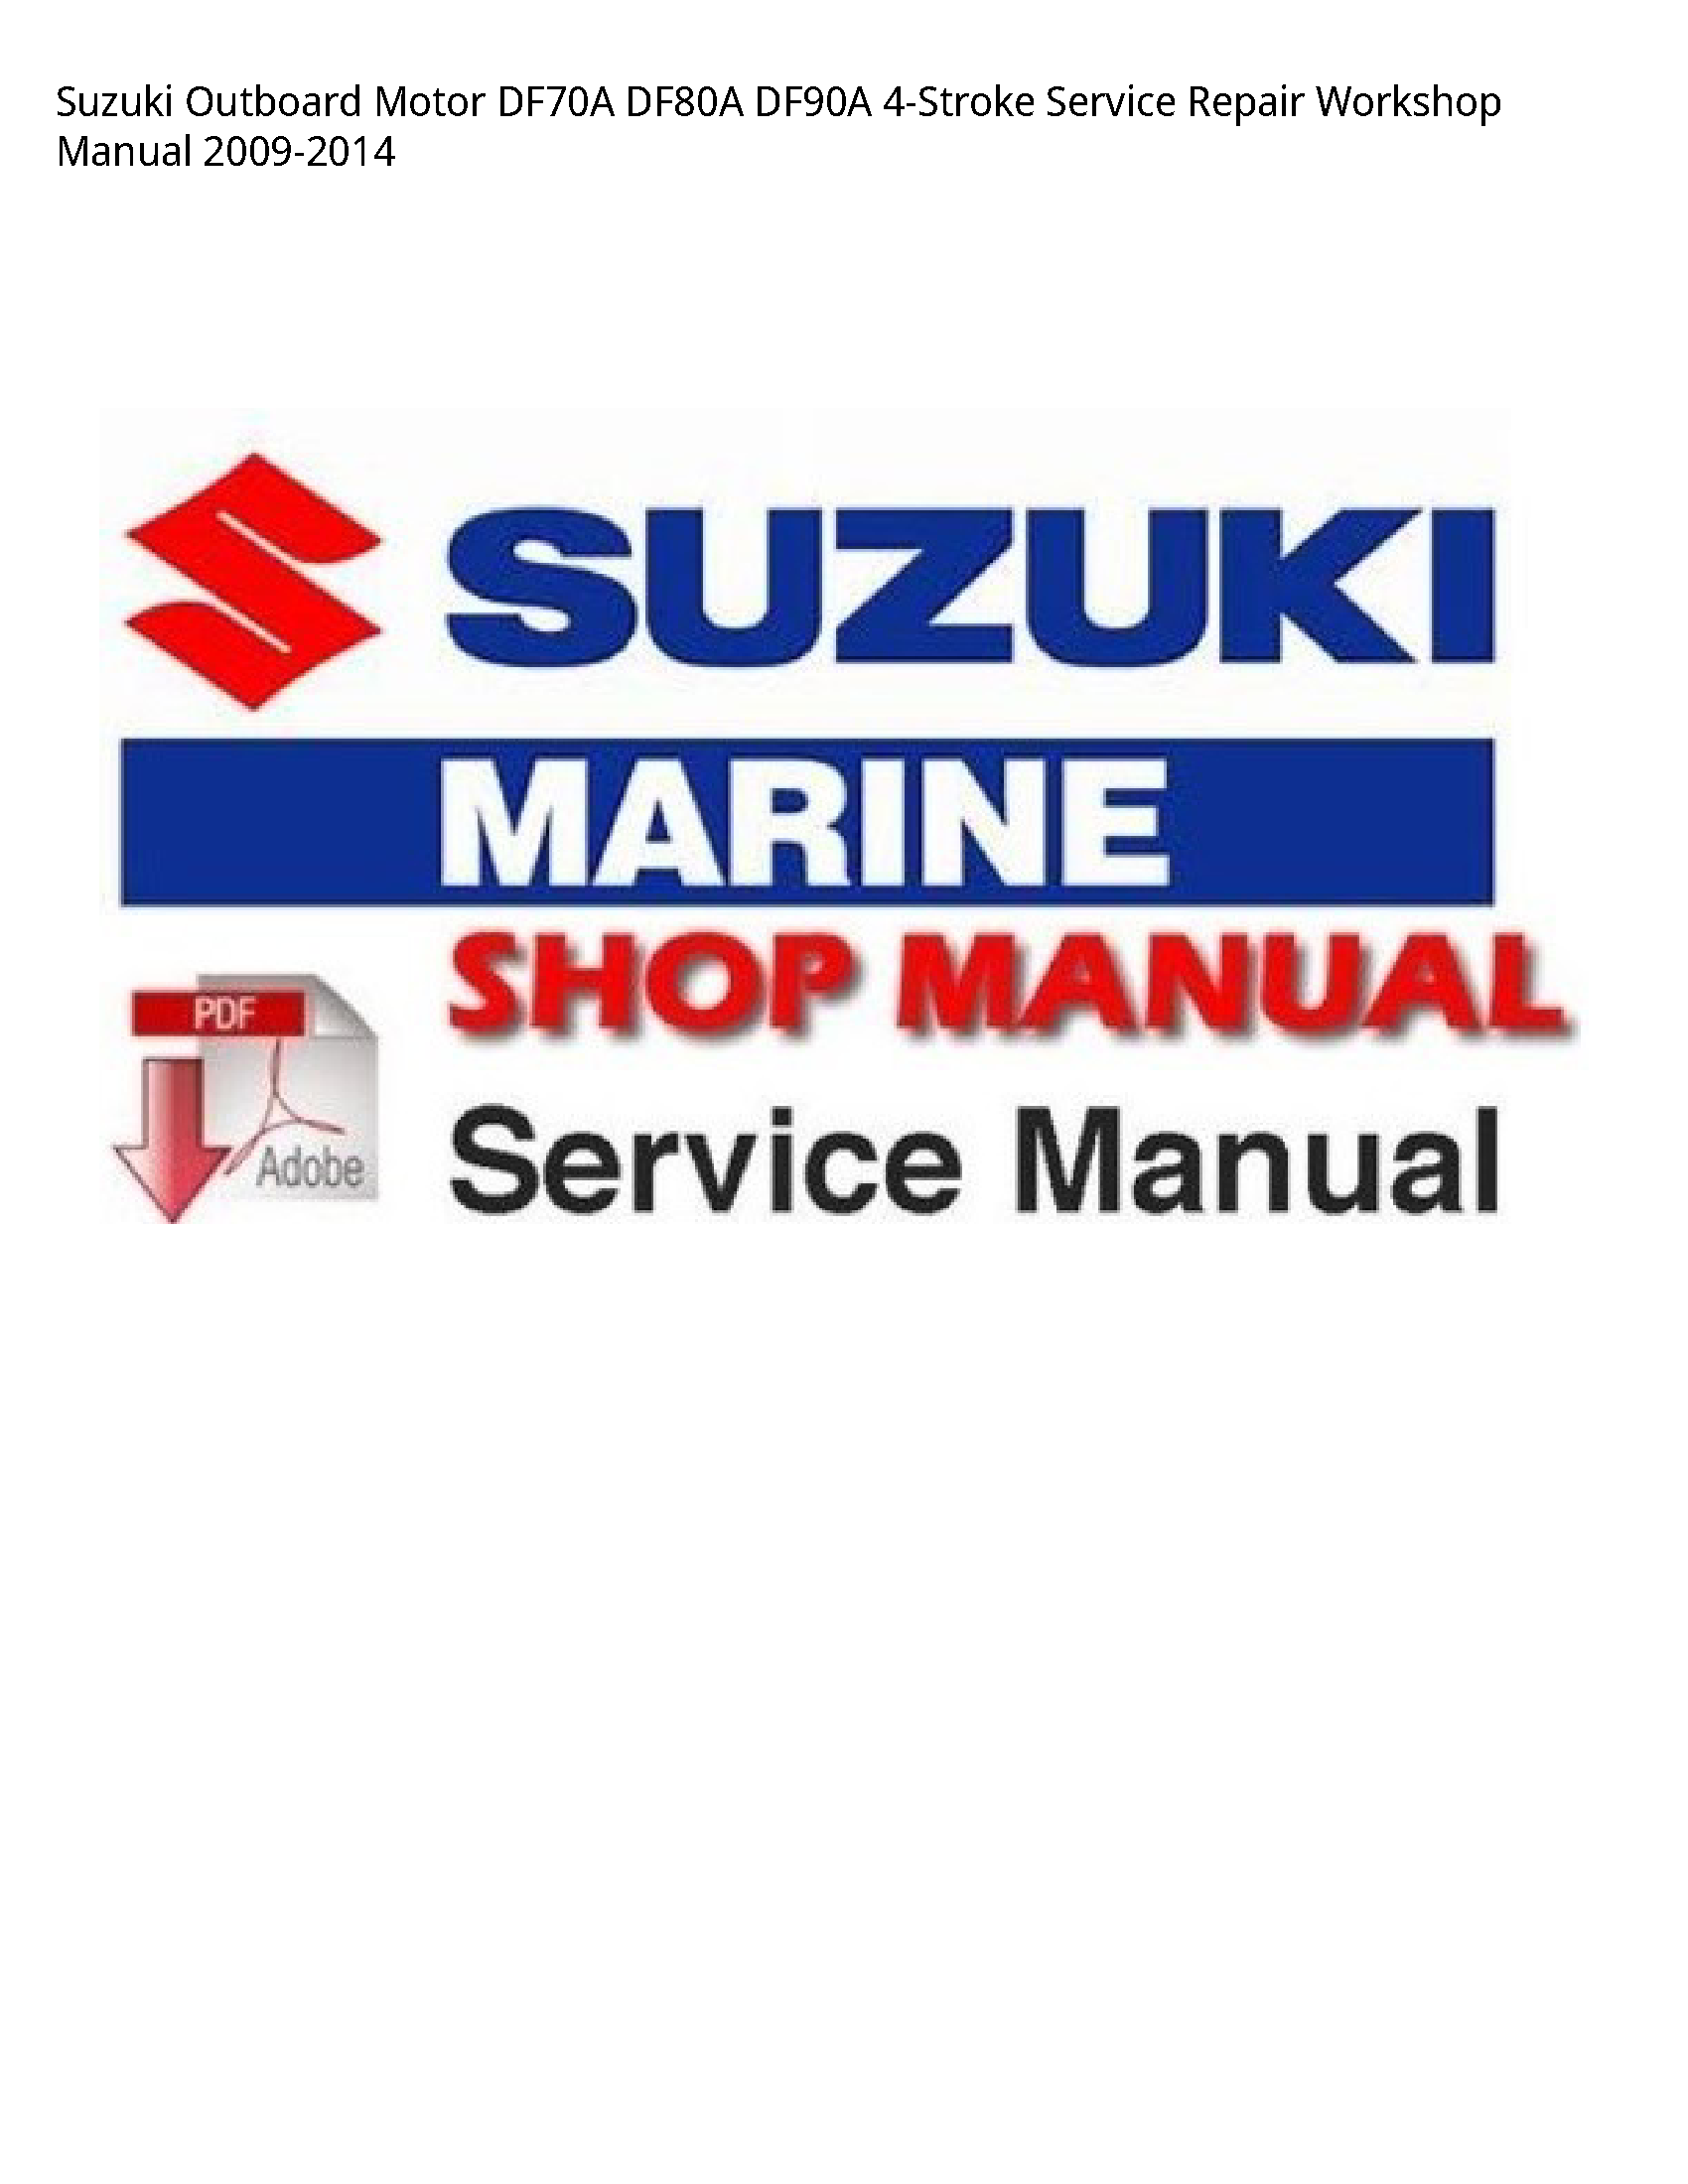 Suzuki DF70A Outboard Motor manual